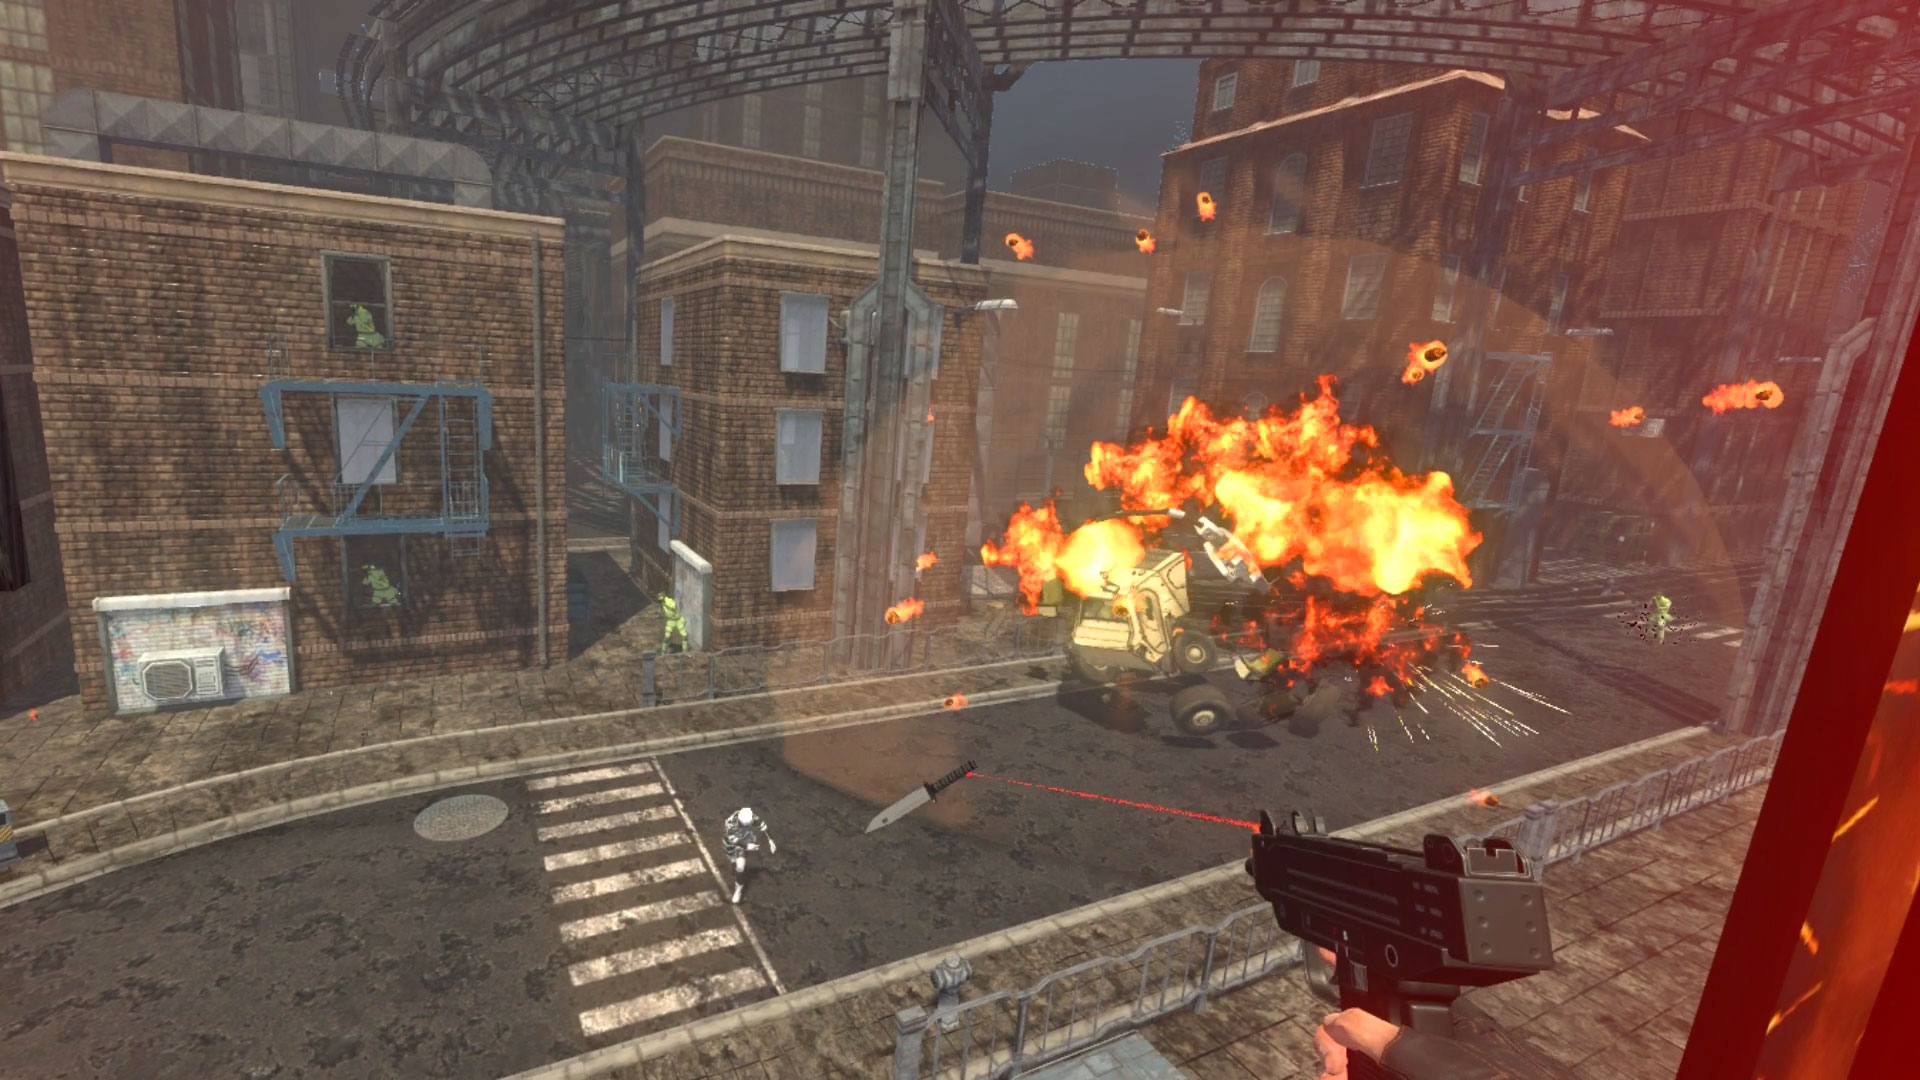 Operation Warcade VR screenshot